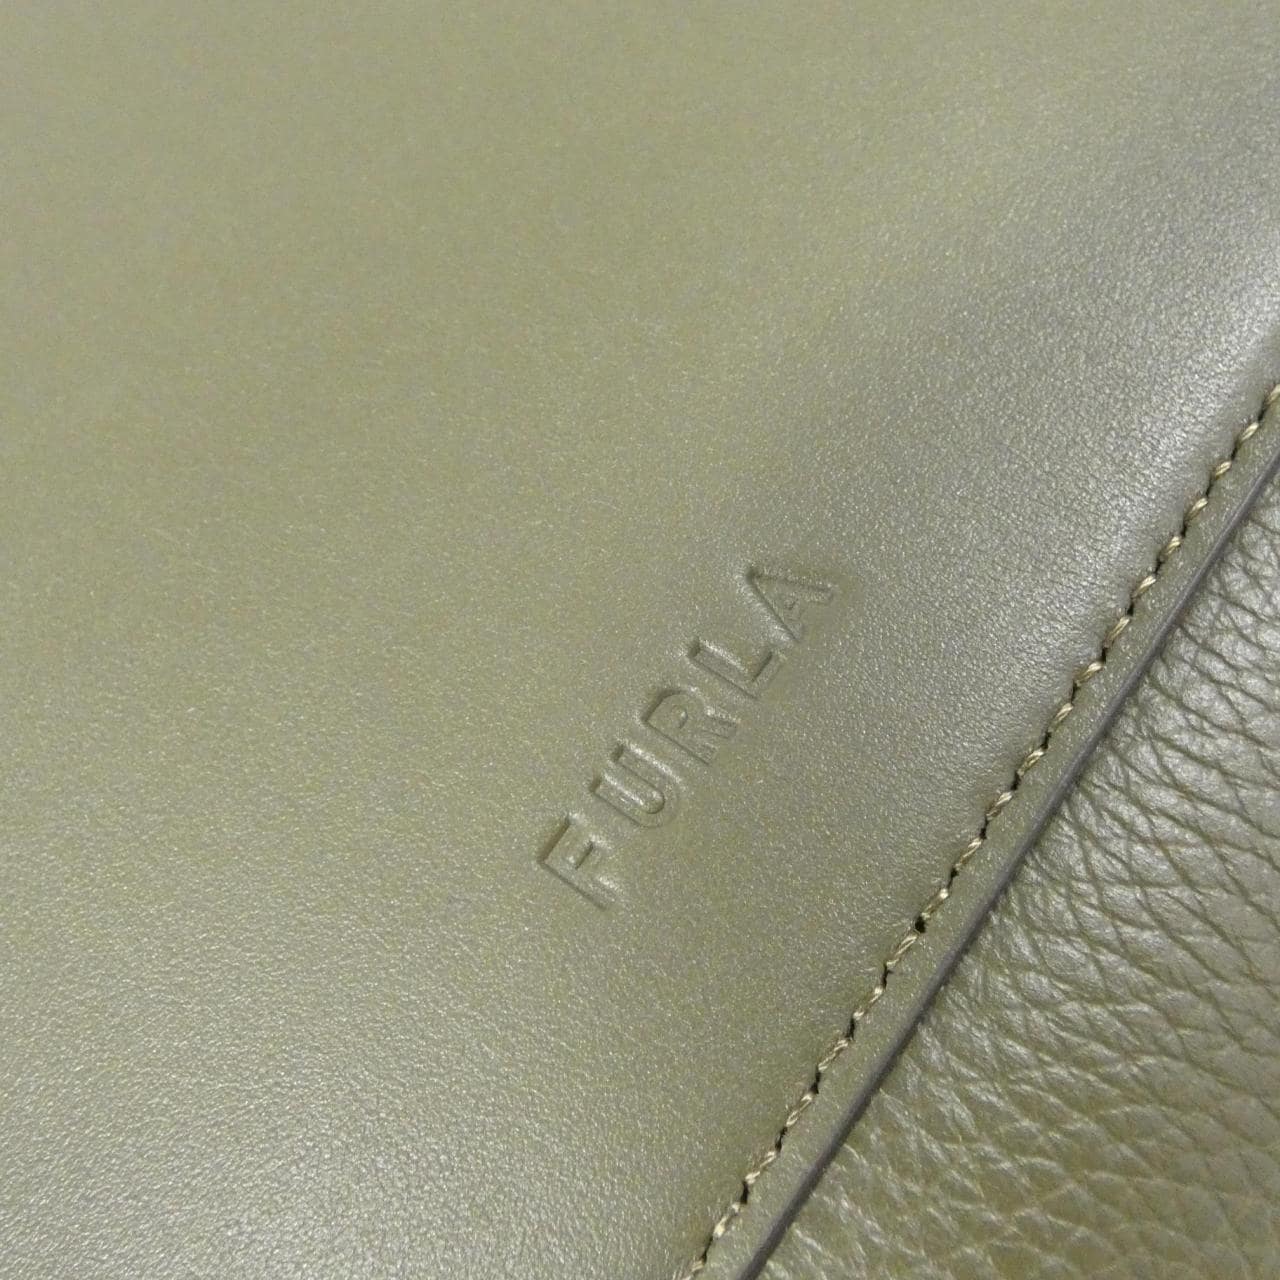 [BRAND NEW] Furla GILDA WB00513 bag